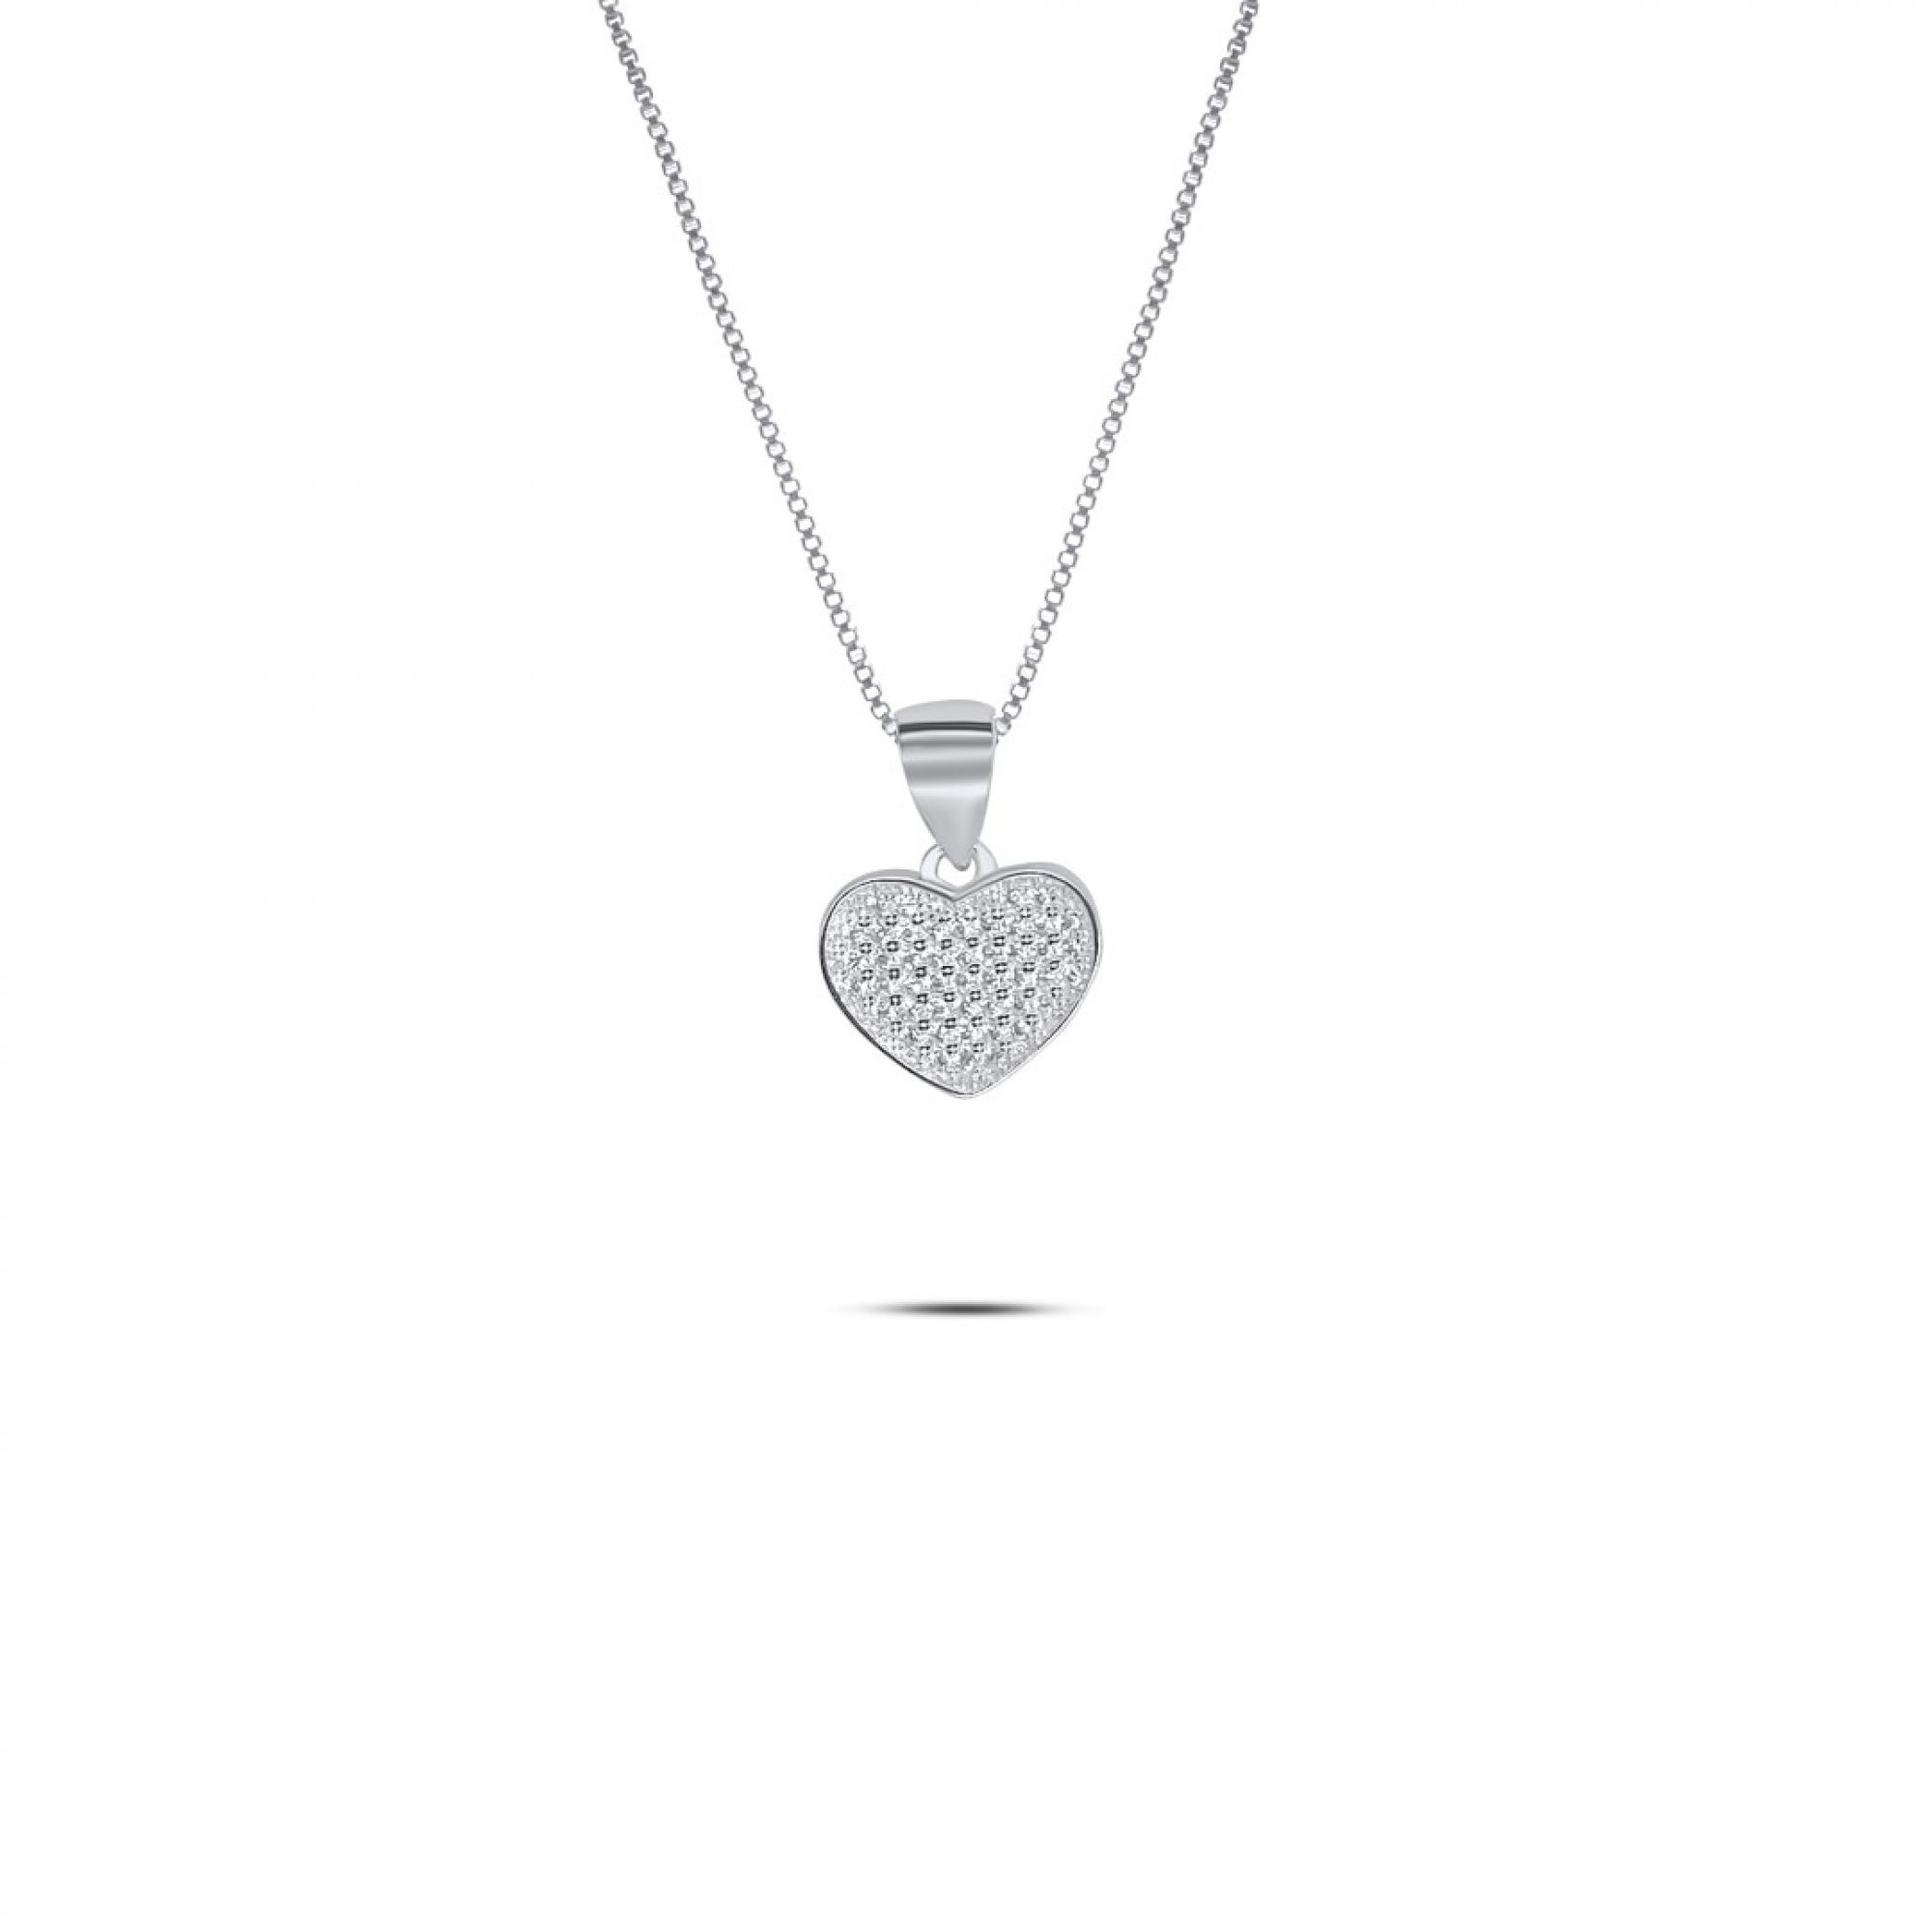 Heart necklace with zircon stones